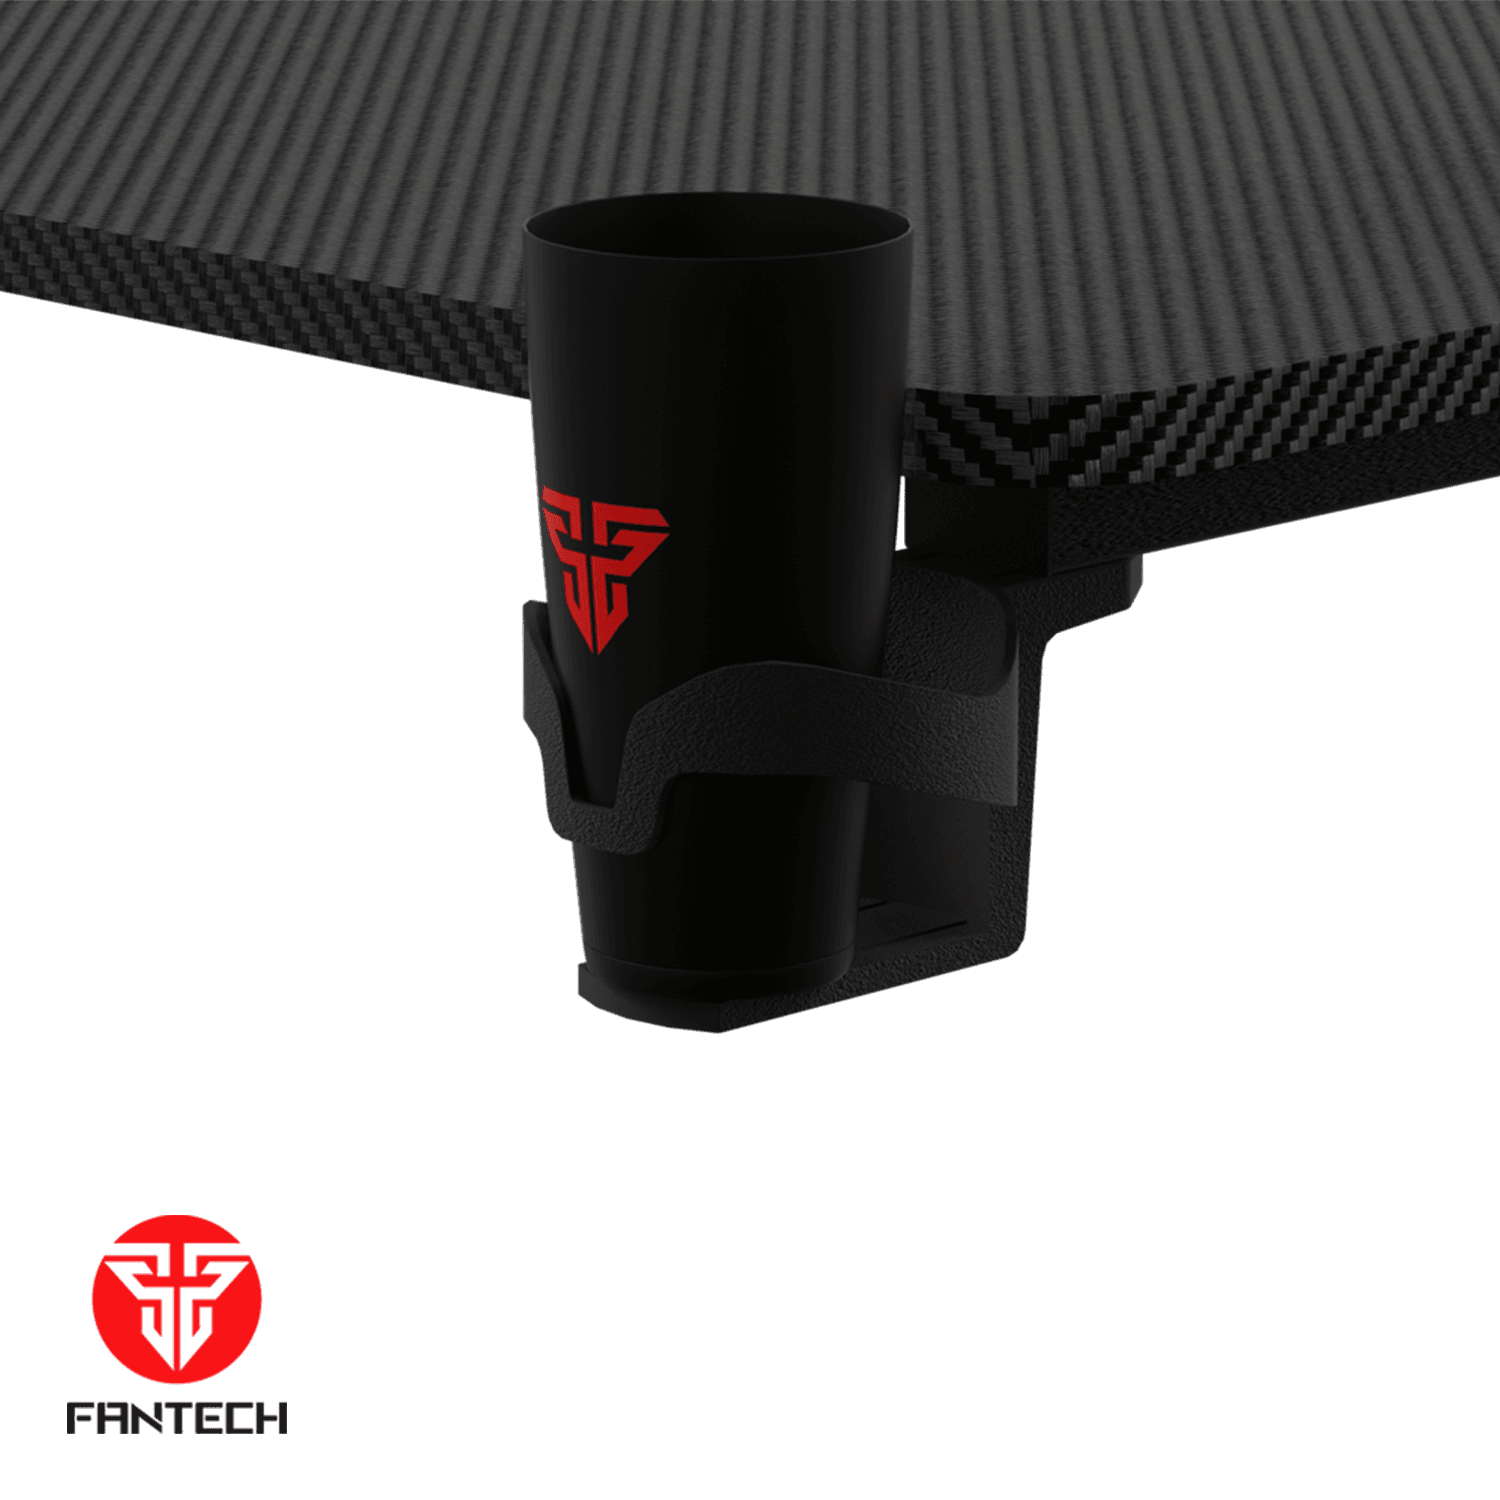 Fantech Tigris GD210 Gaming Desk RGB Illumination Premium and Sleek Large